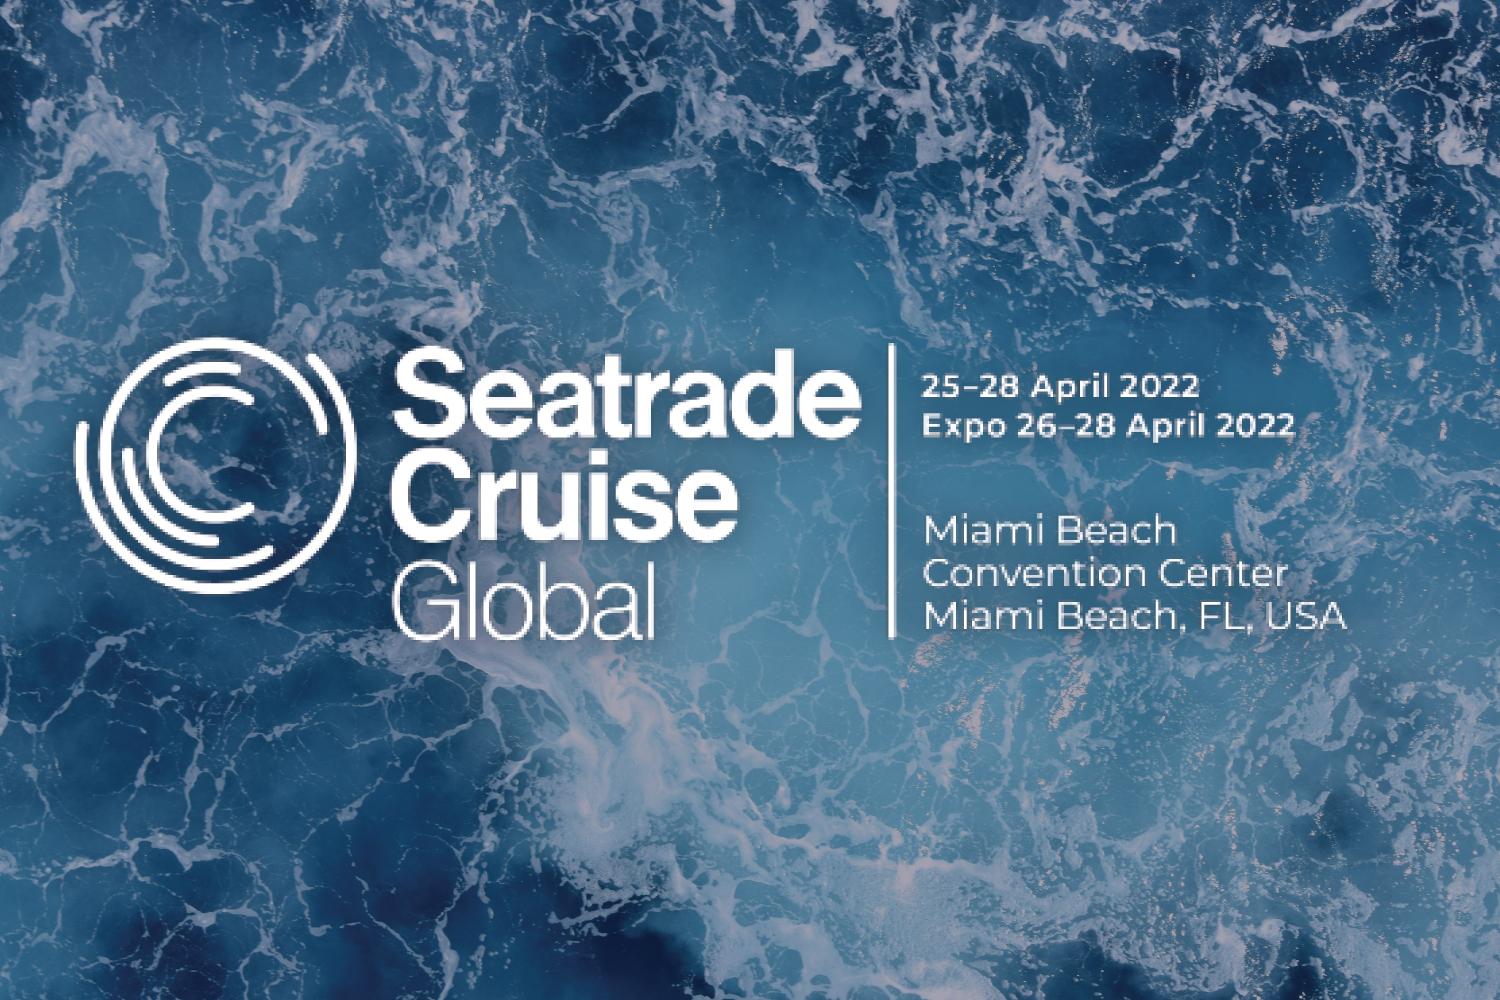 seatrade cruise global event